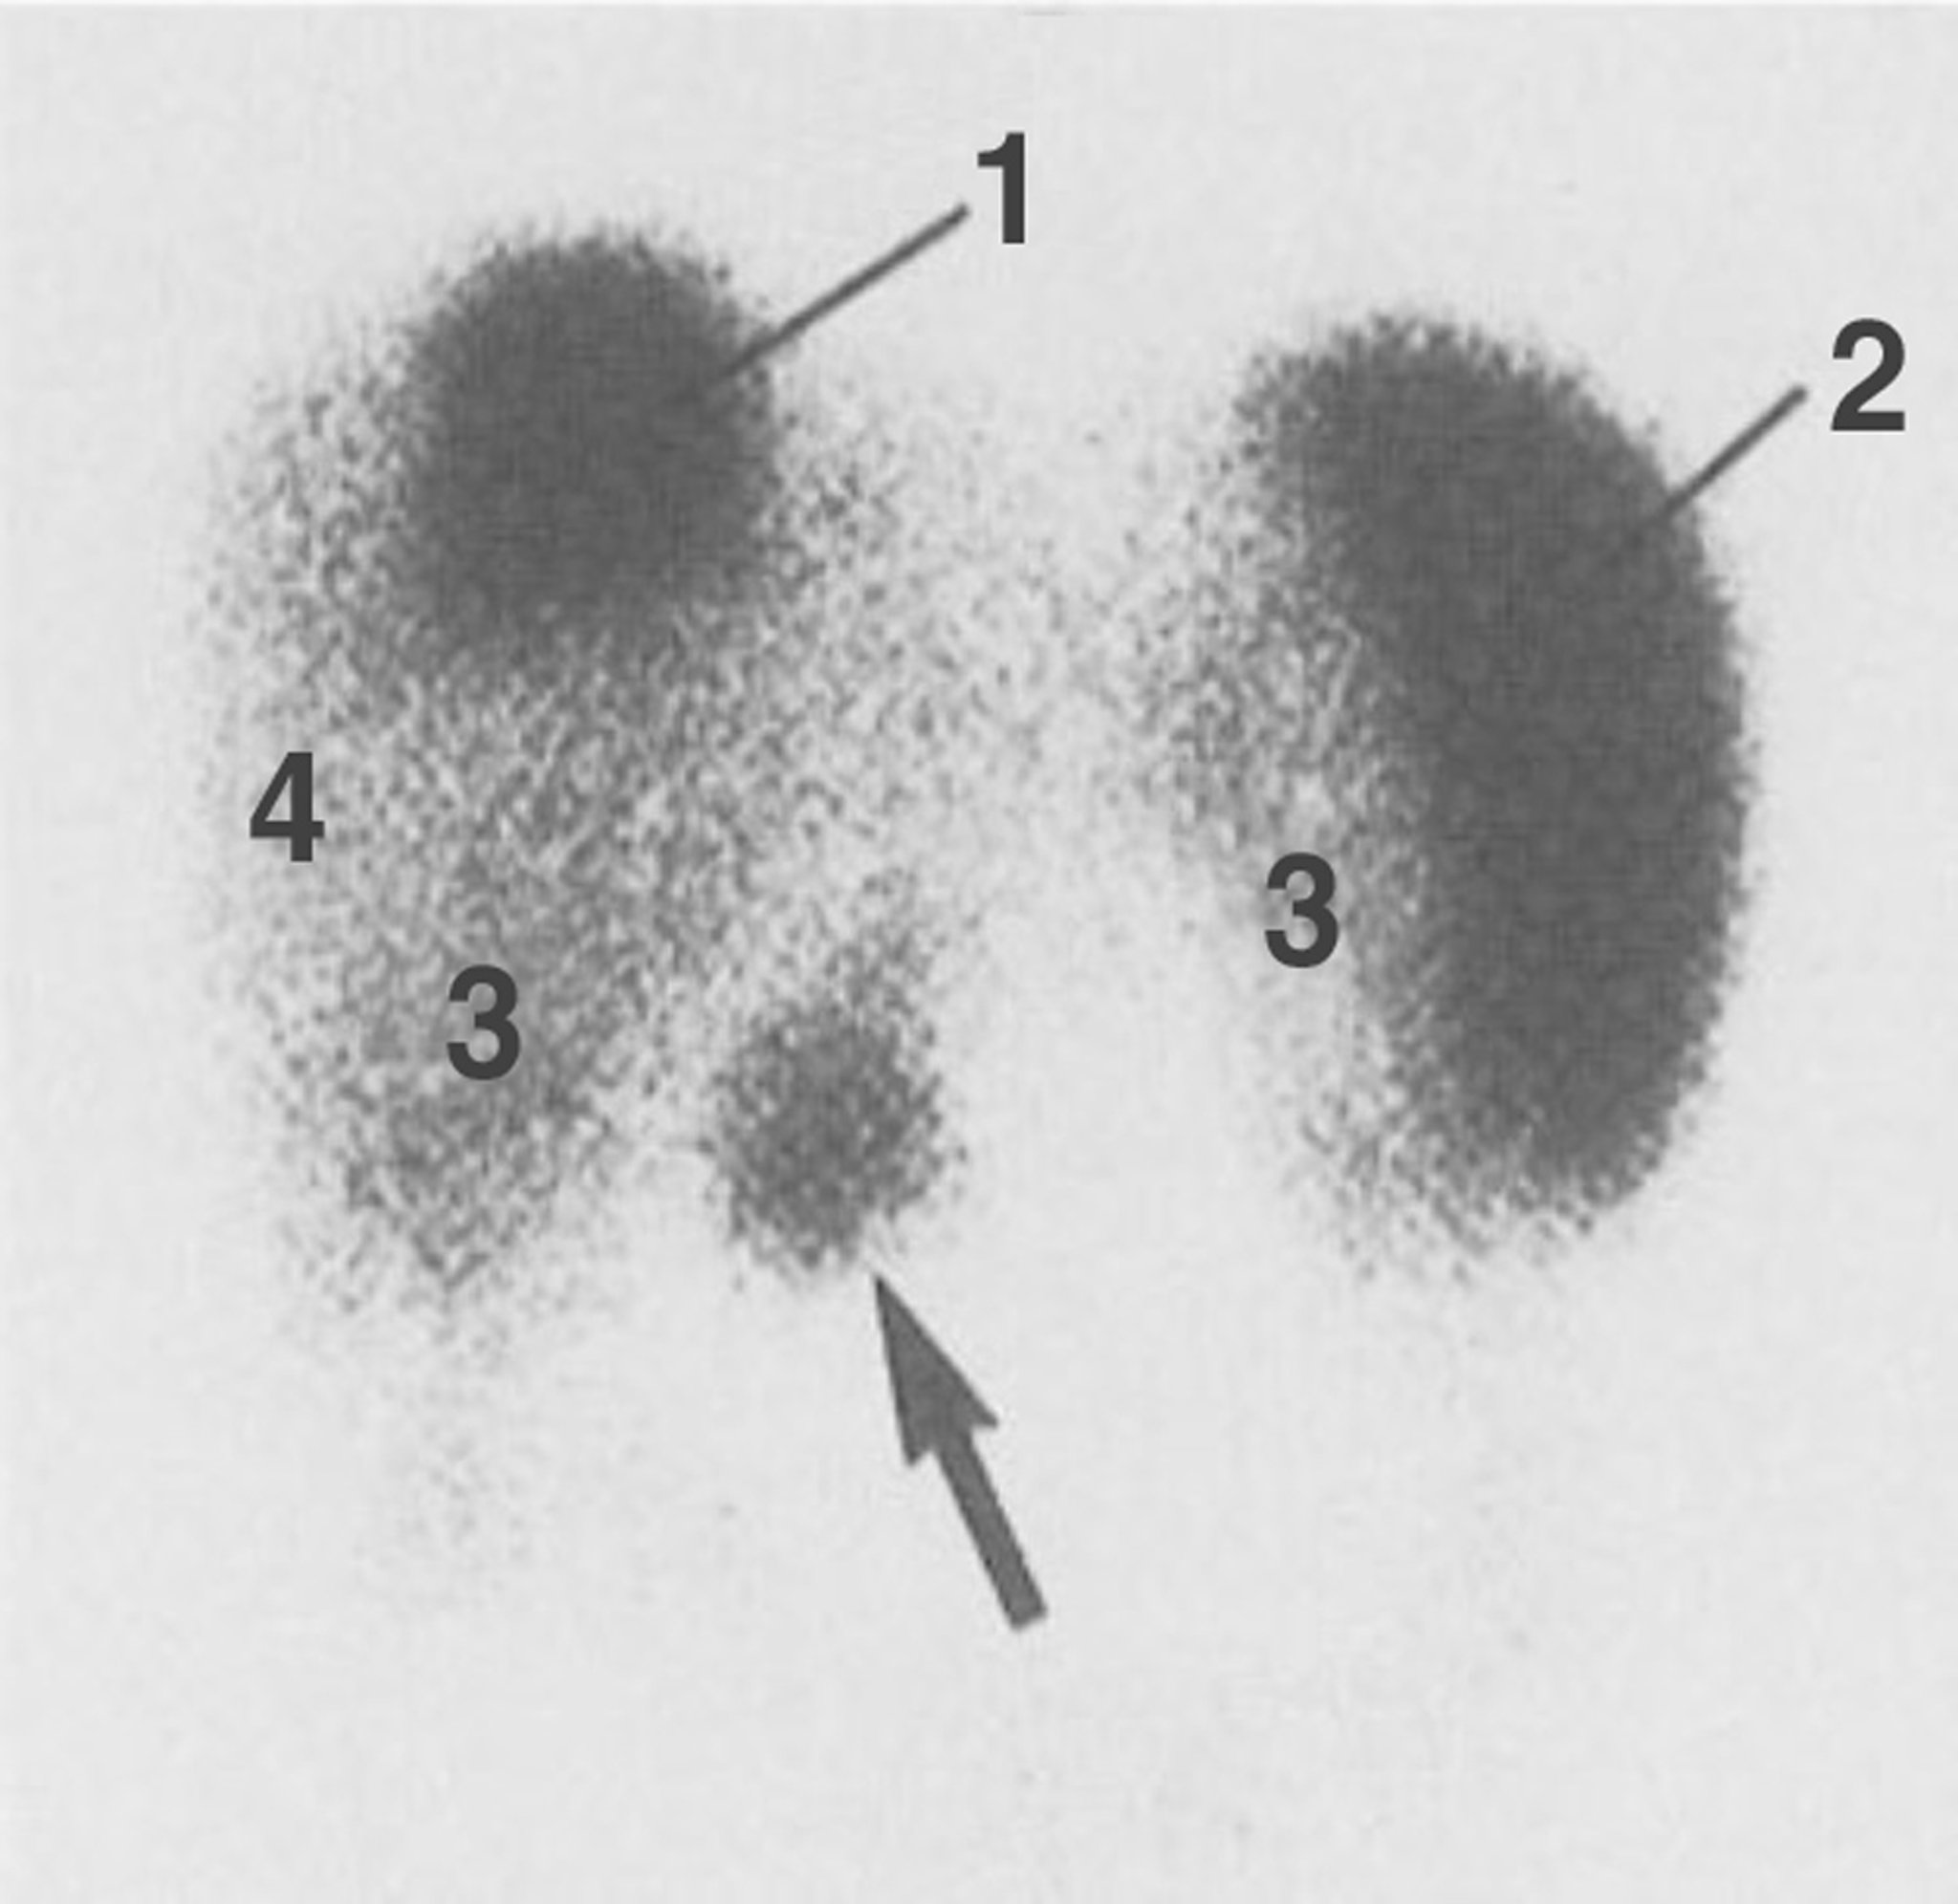 Somatostatin Receptor Scintigraphy (Octreotide Scan) Showing Gastrinoma Primary Tumor Site and Metastasis